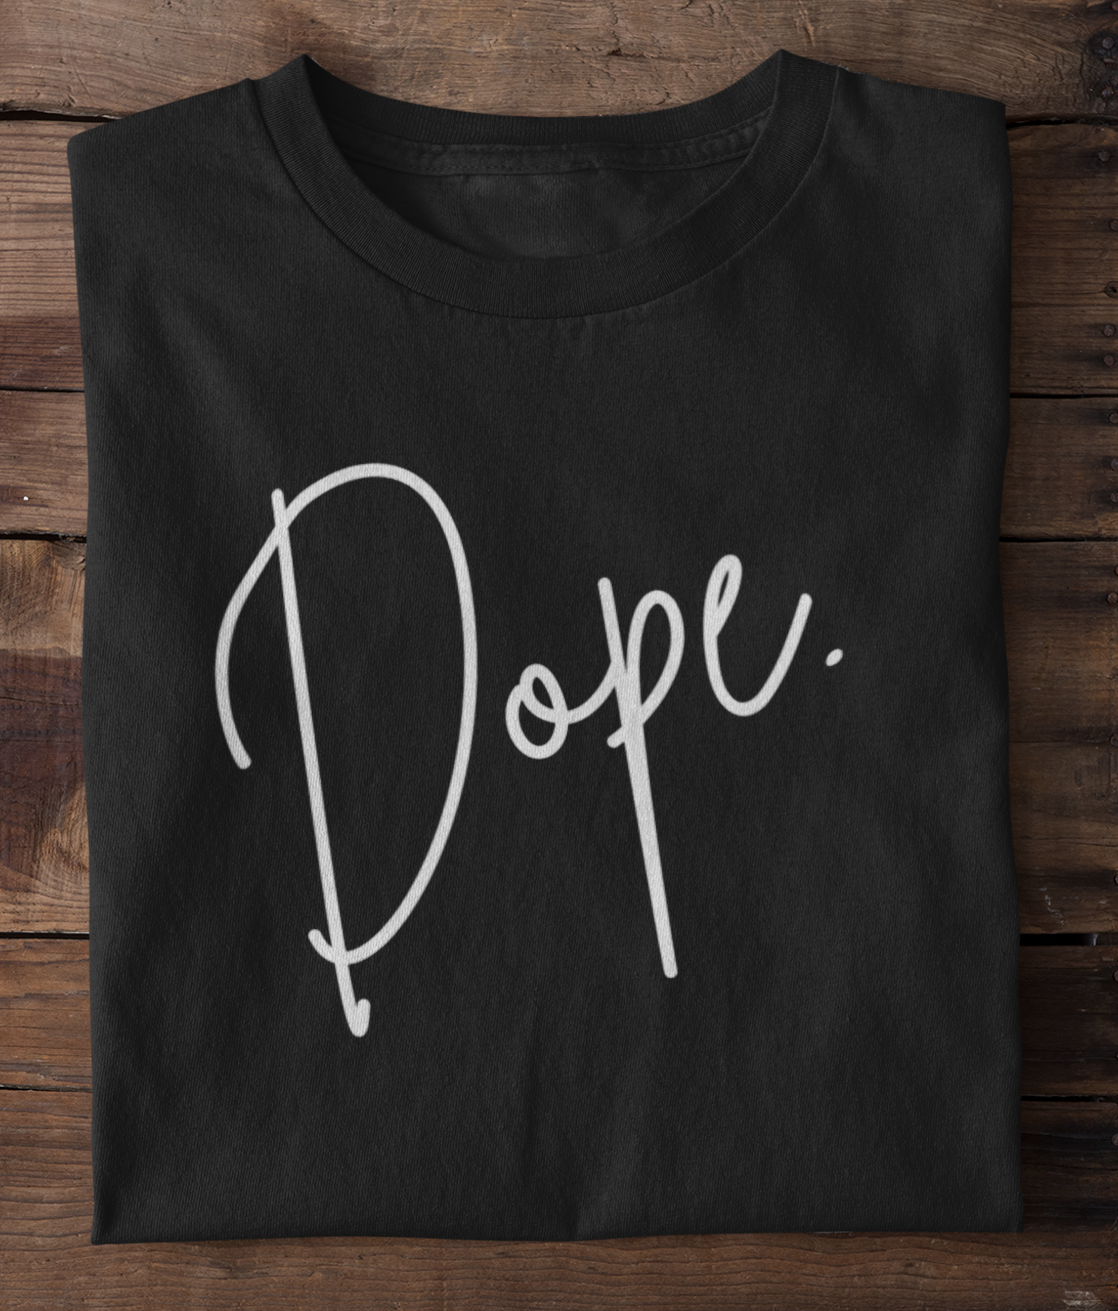 Dope T-Shirt